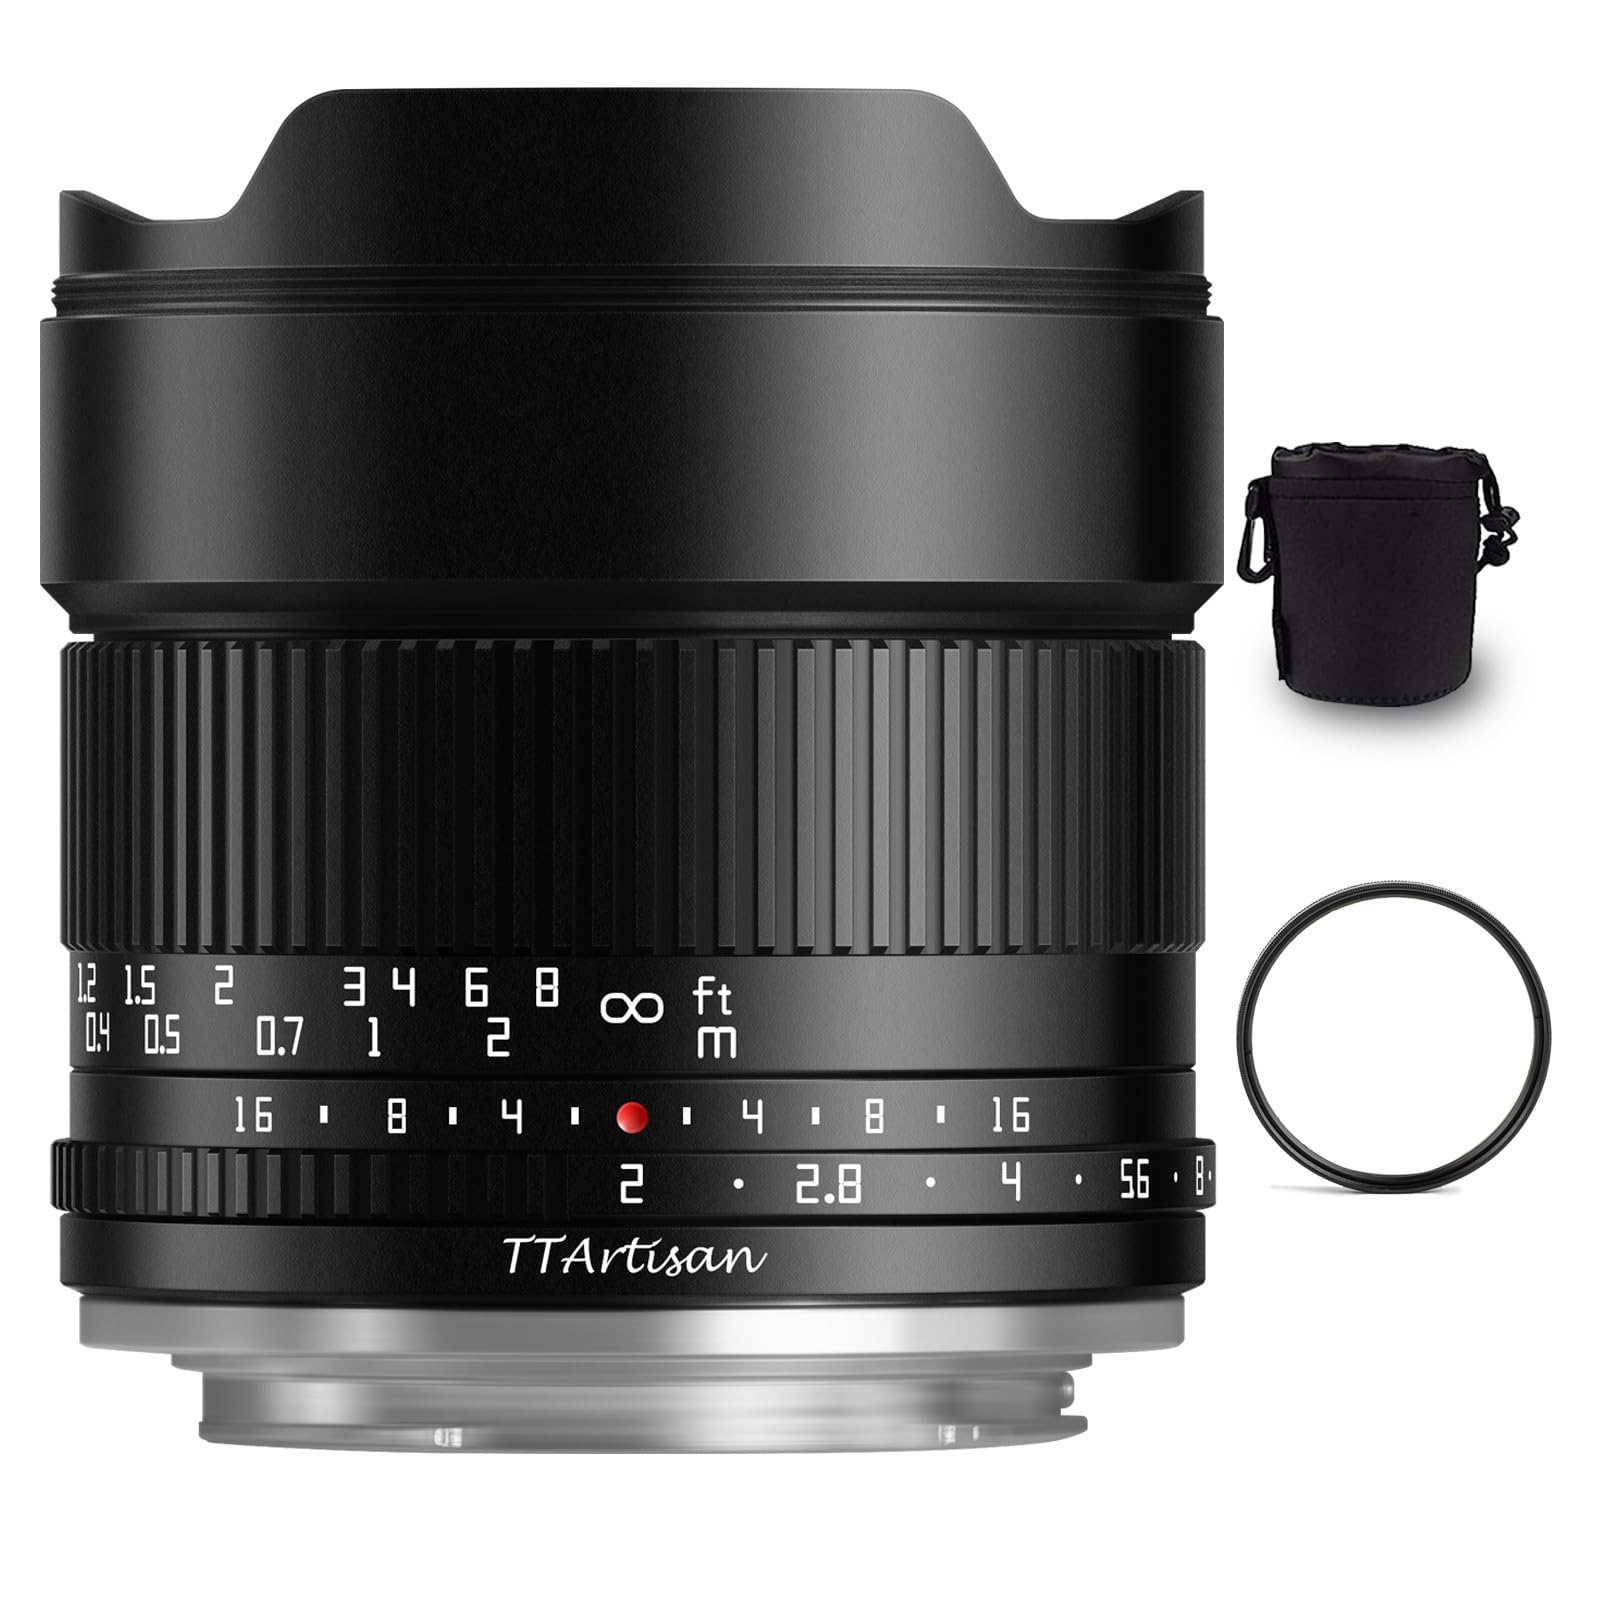 TTARTISAN 10mm F2 APS-C Ultra Wide Large Aperture Manual Focus Lens for Fuji X-Mount X-A2 X-A3 X-A5 X-A7 X-M1 X-M2 X-H1 X-T10